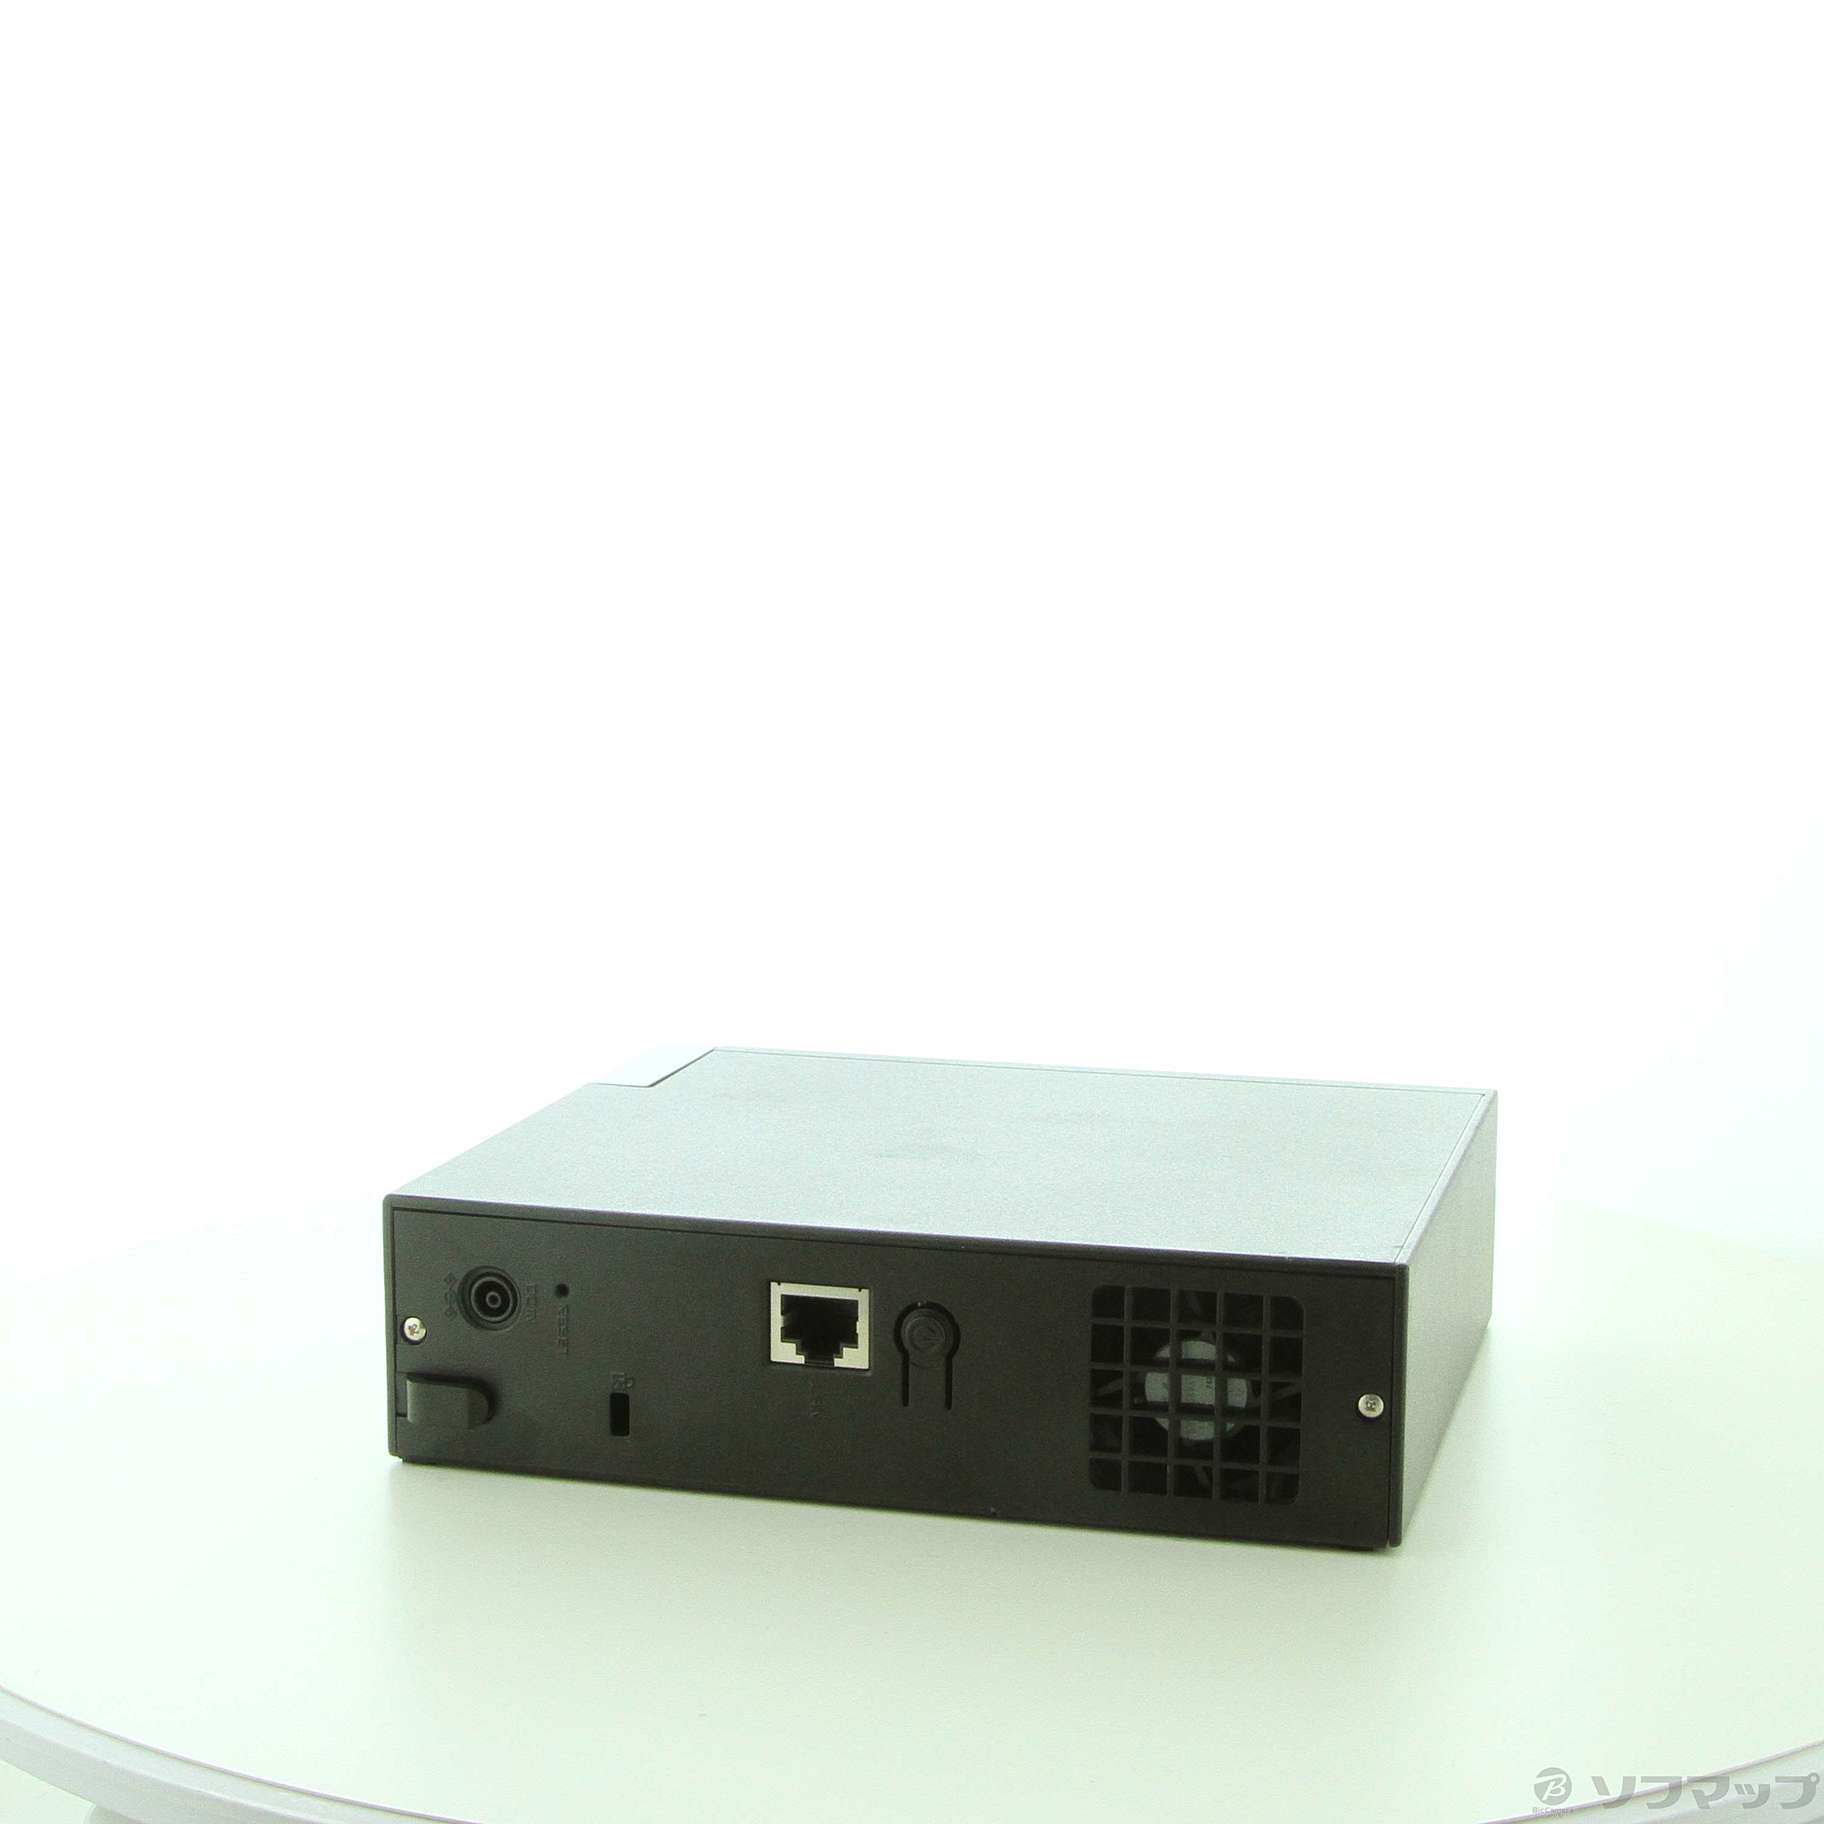 RECBOX HVL-S2 (ネットワークHDD)